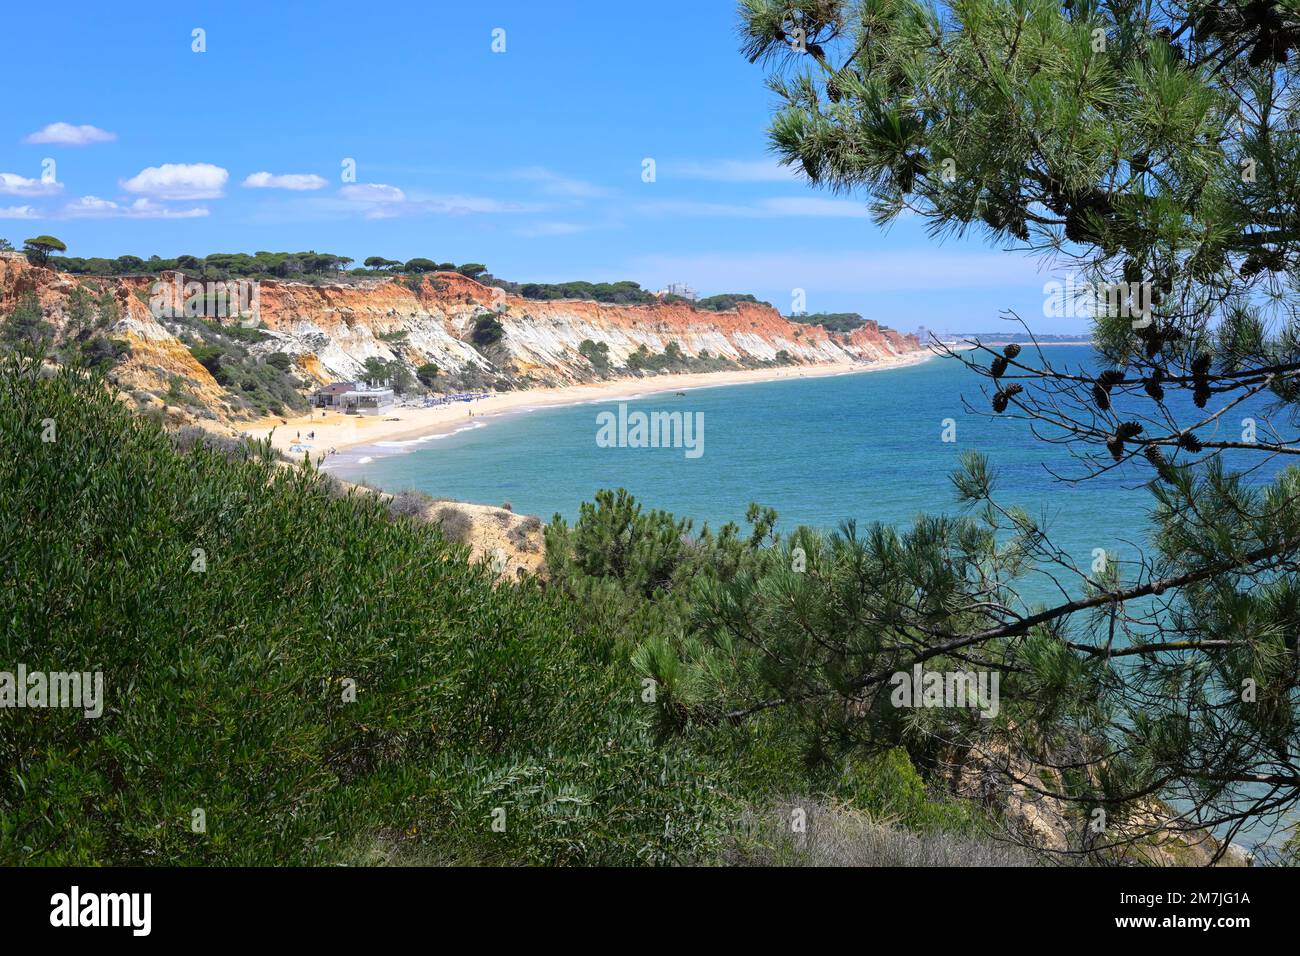 Plage de Praia da Falesia, Albufeira, Algarve, Portugal Banque D'Images